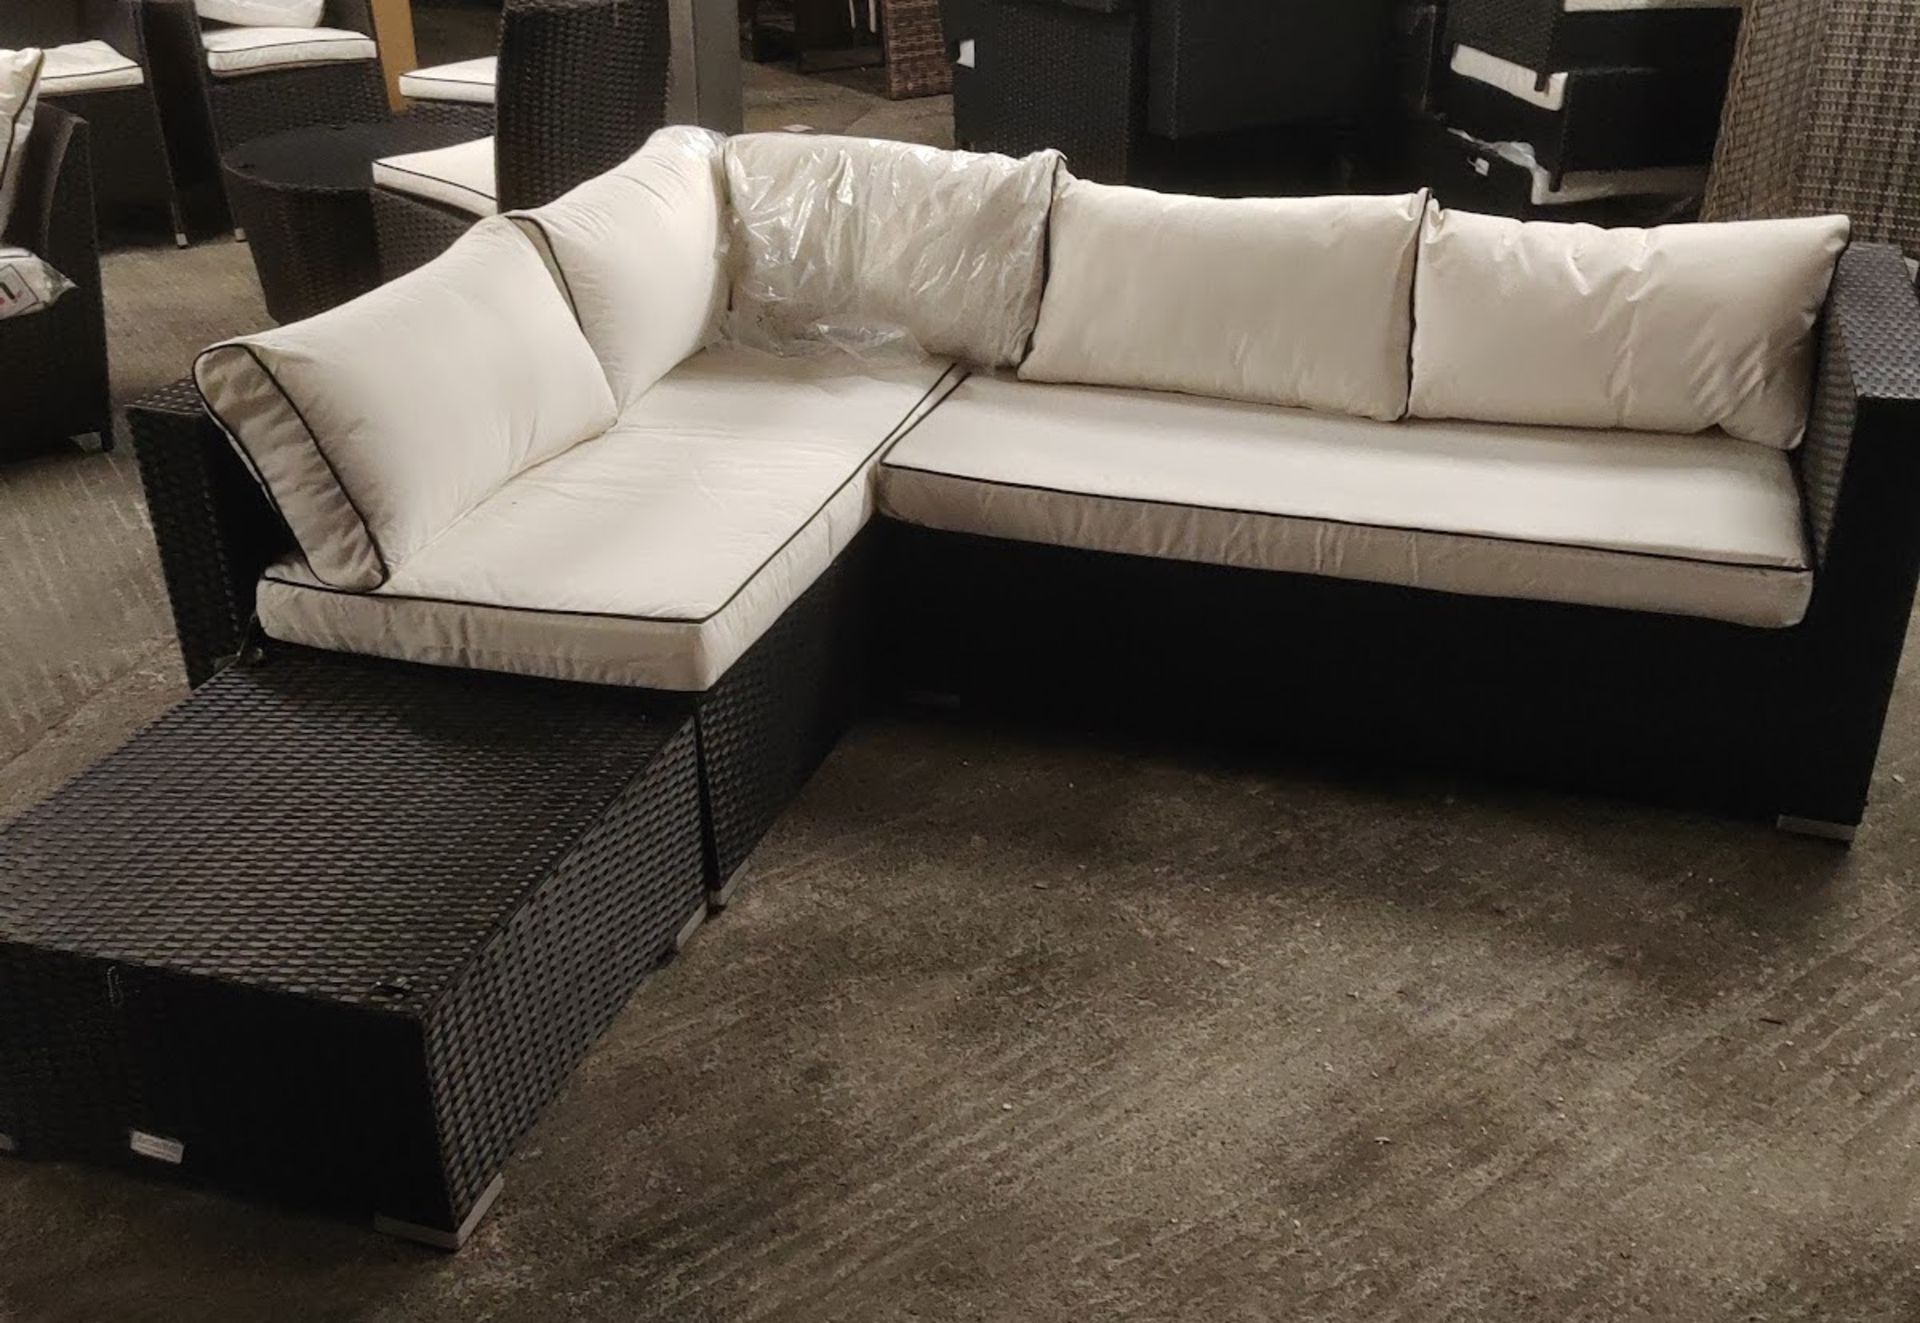 Authentic â€˜Rattanâ€™ Branded Corner Sofa and Table - Black - Ex-Display!